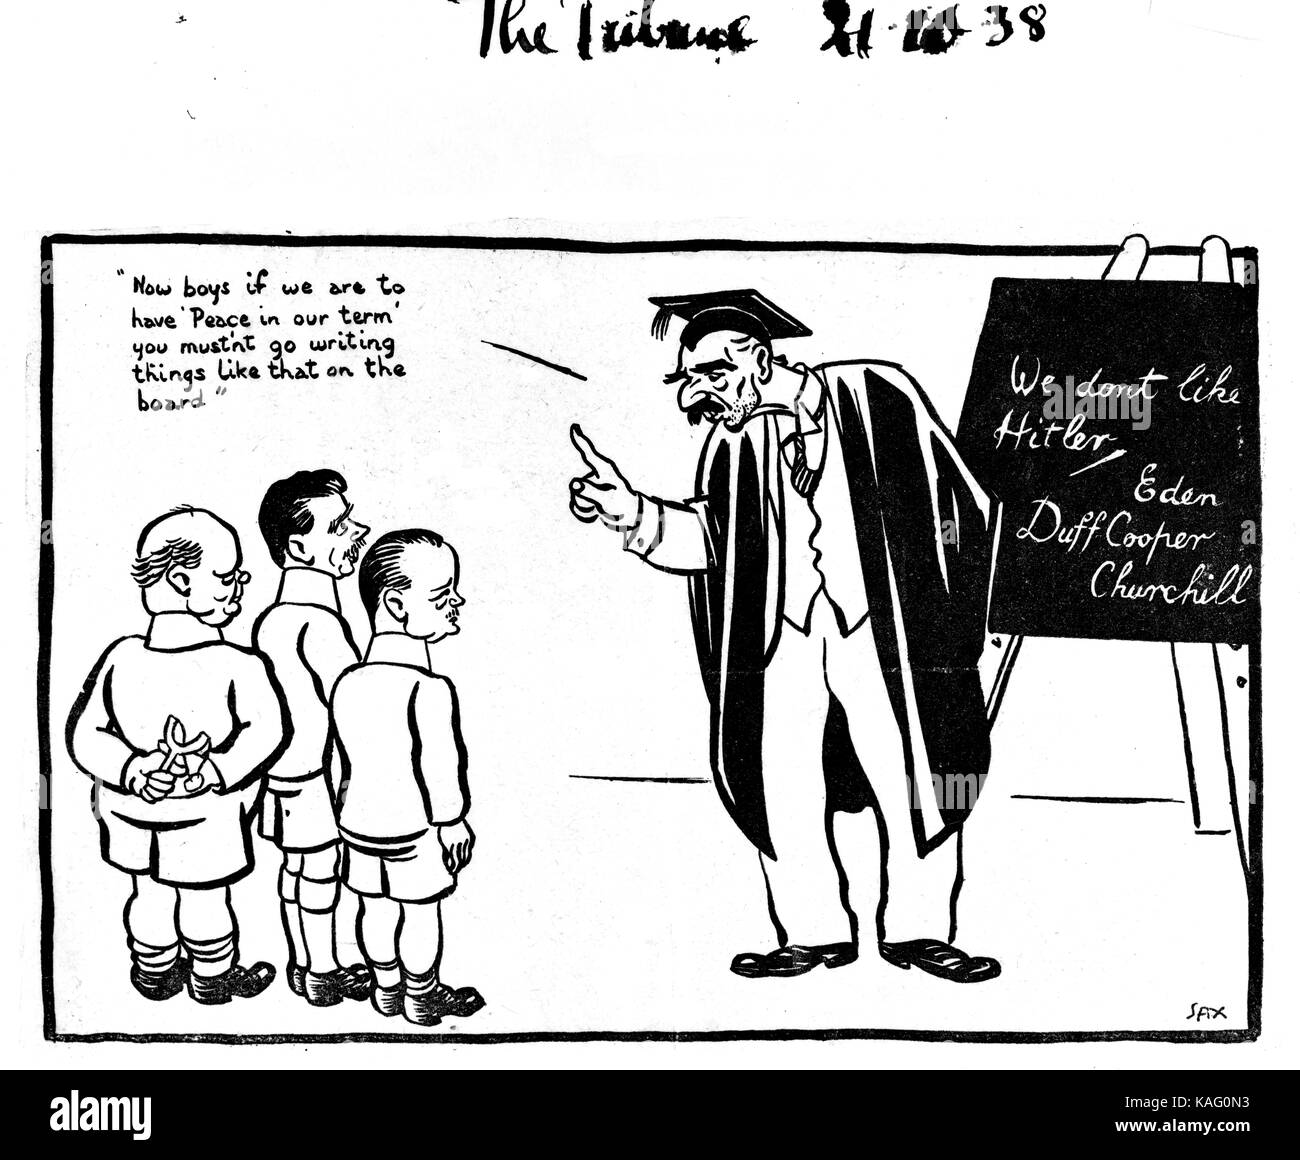 churchill cartoon The Tribune 21.10.1938 Stock Photo